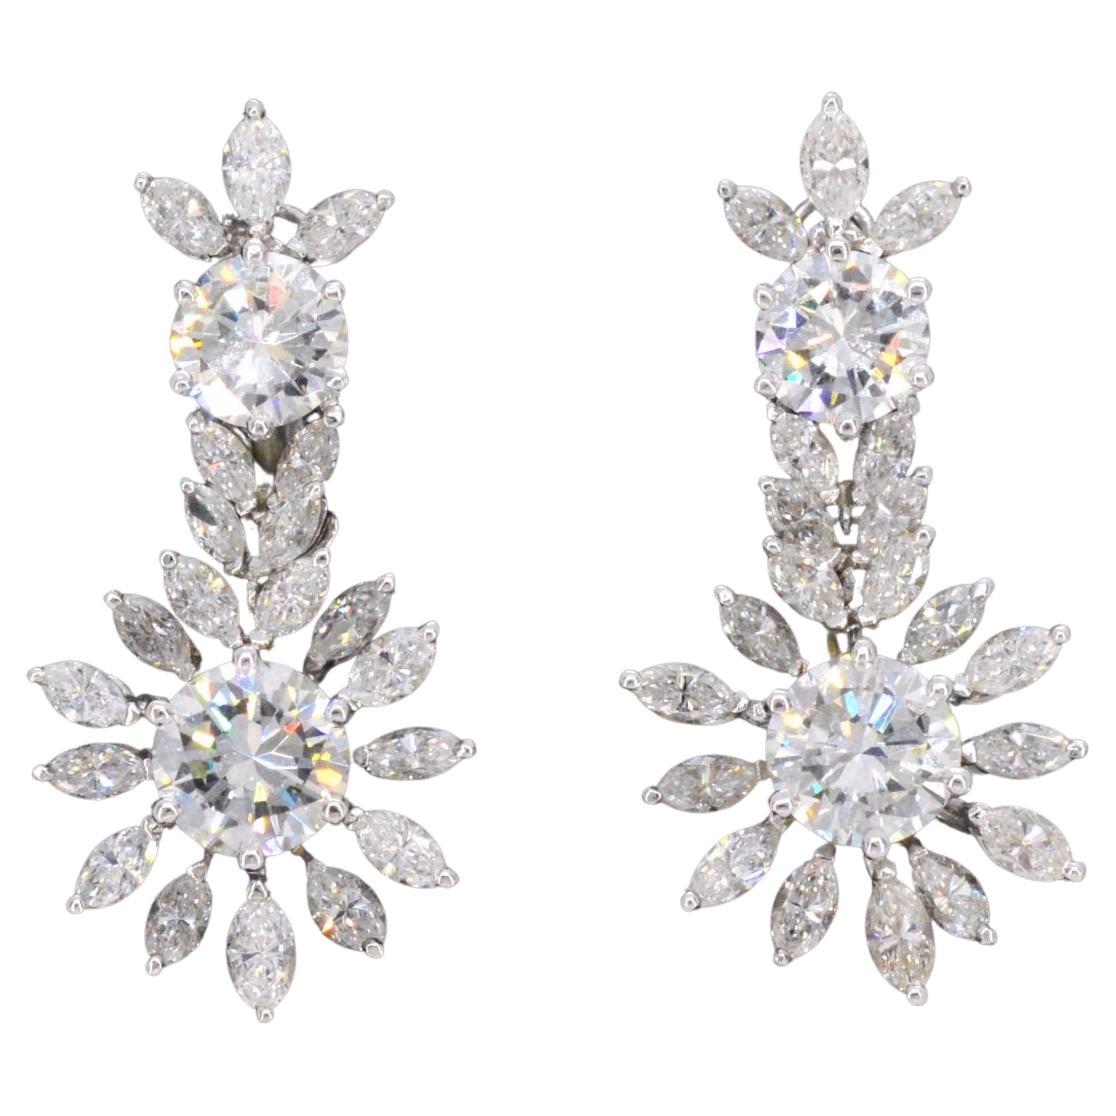 Golden exclusive earrings with diamonds